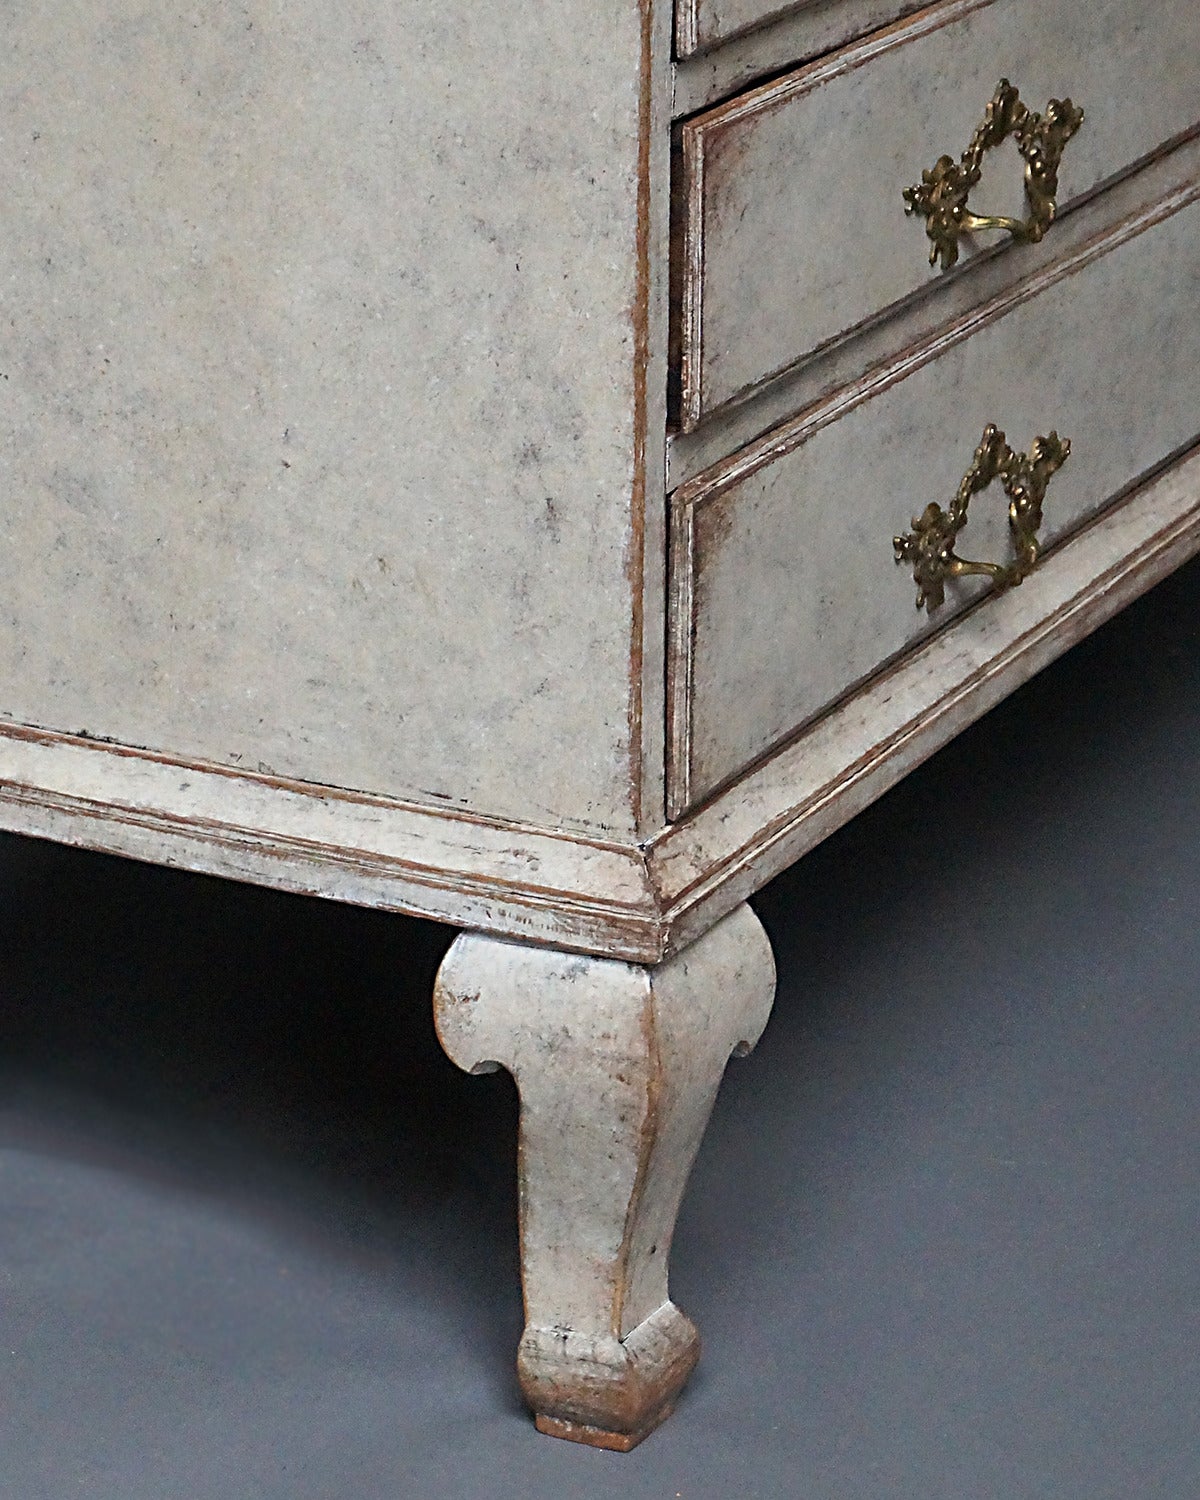 Carved Period Rococo Cabinet